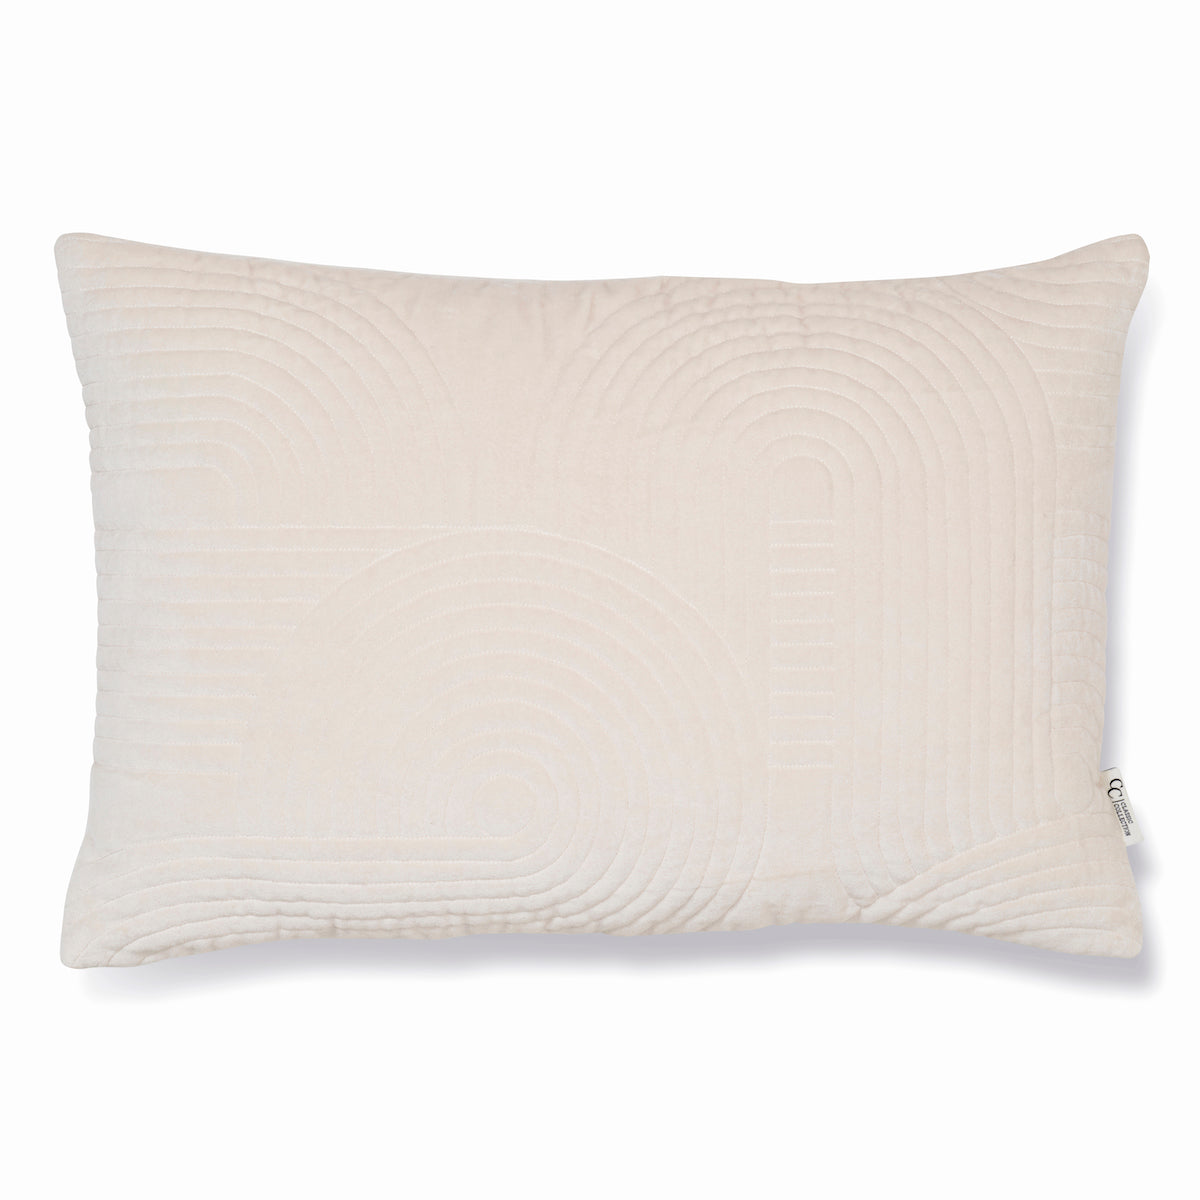 Classic Collection Arch Cushion Cover 40x60 cm - Decorative Cushions & Covers Cotton Velvet Birch - CCAC46BI